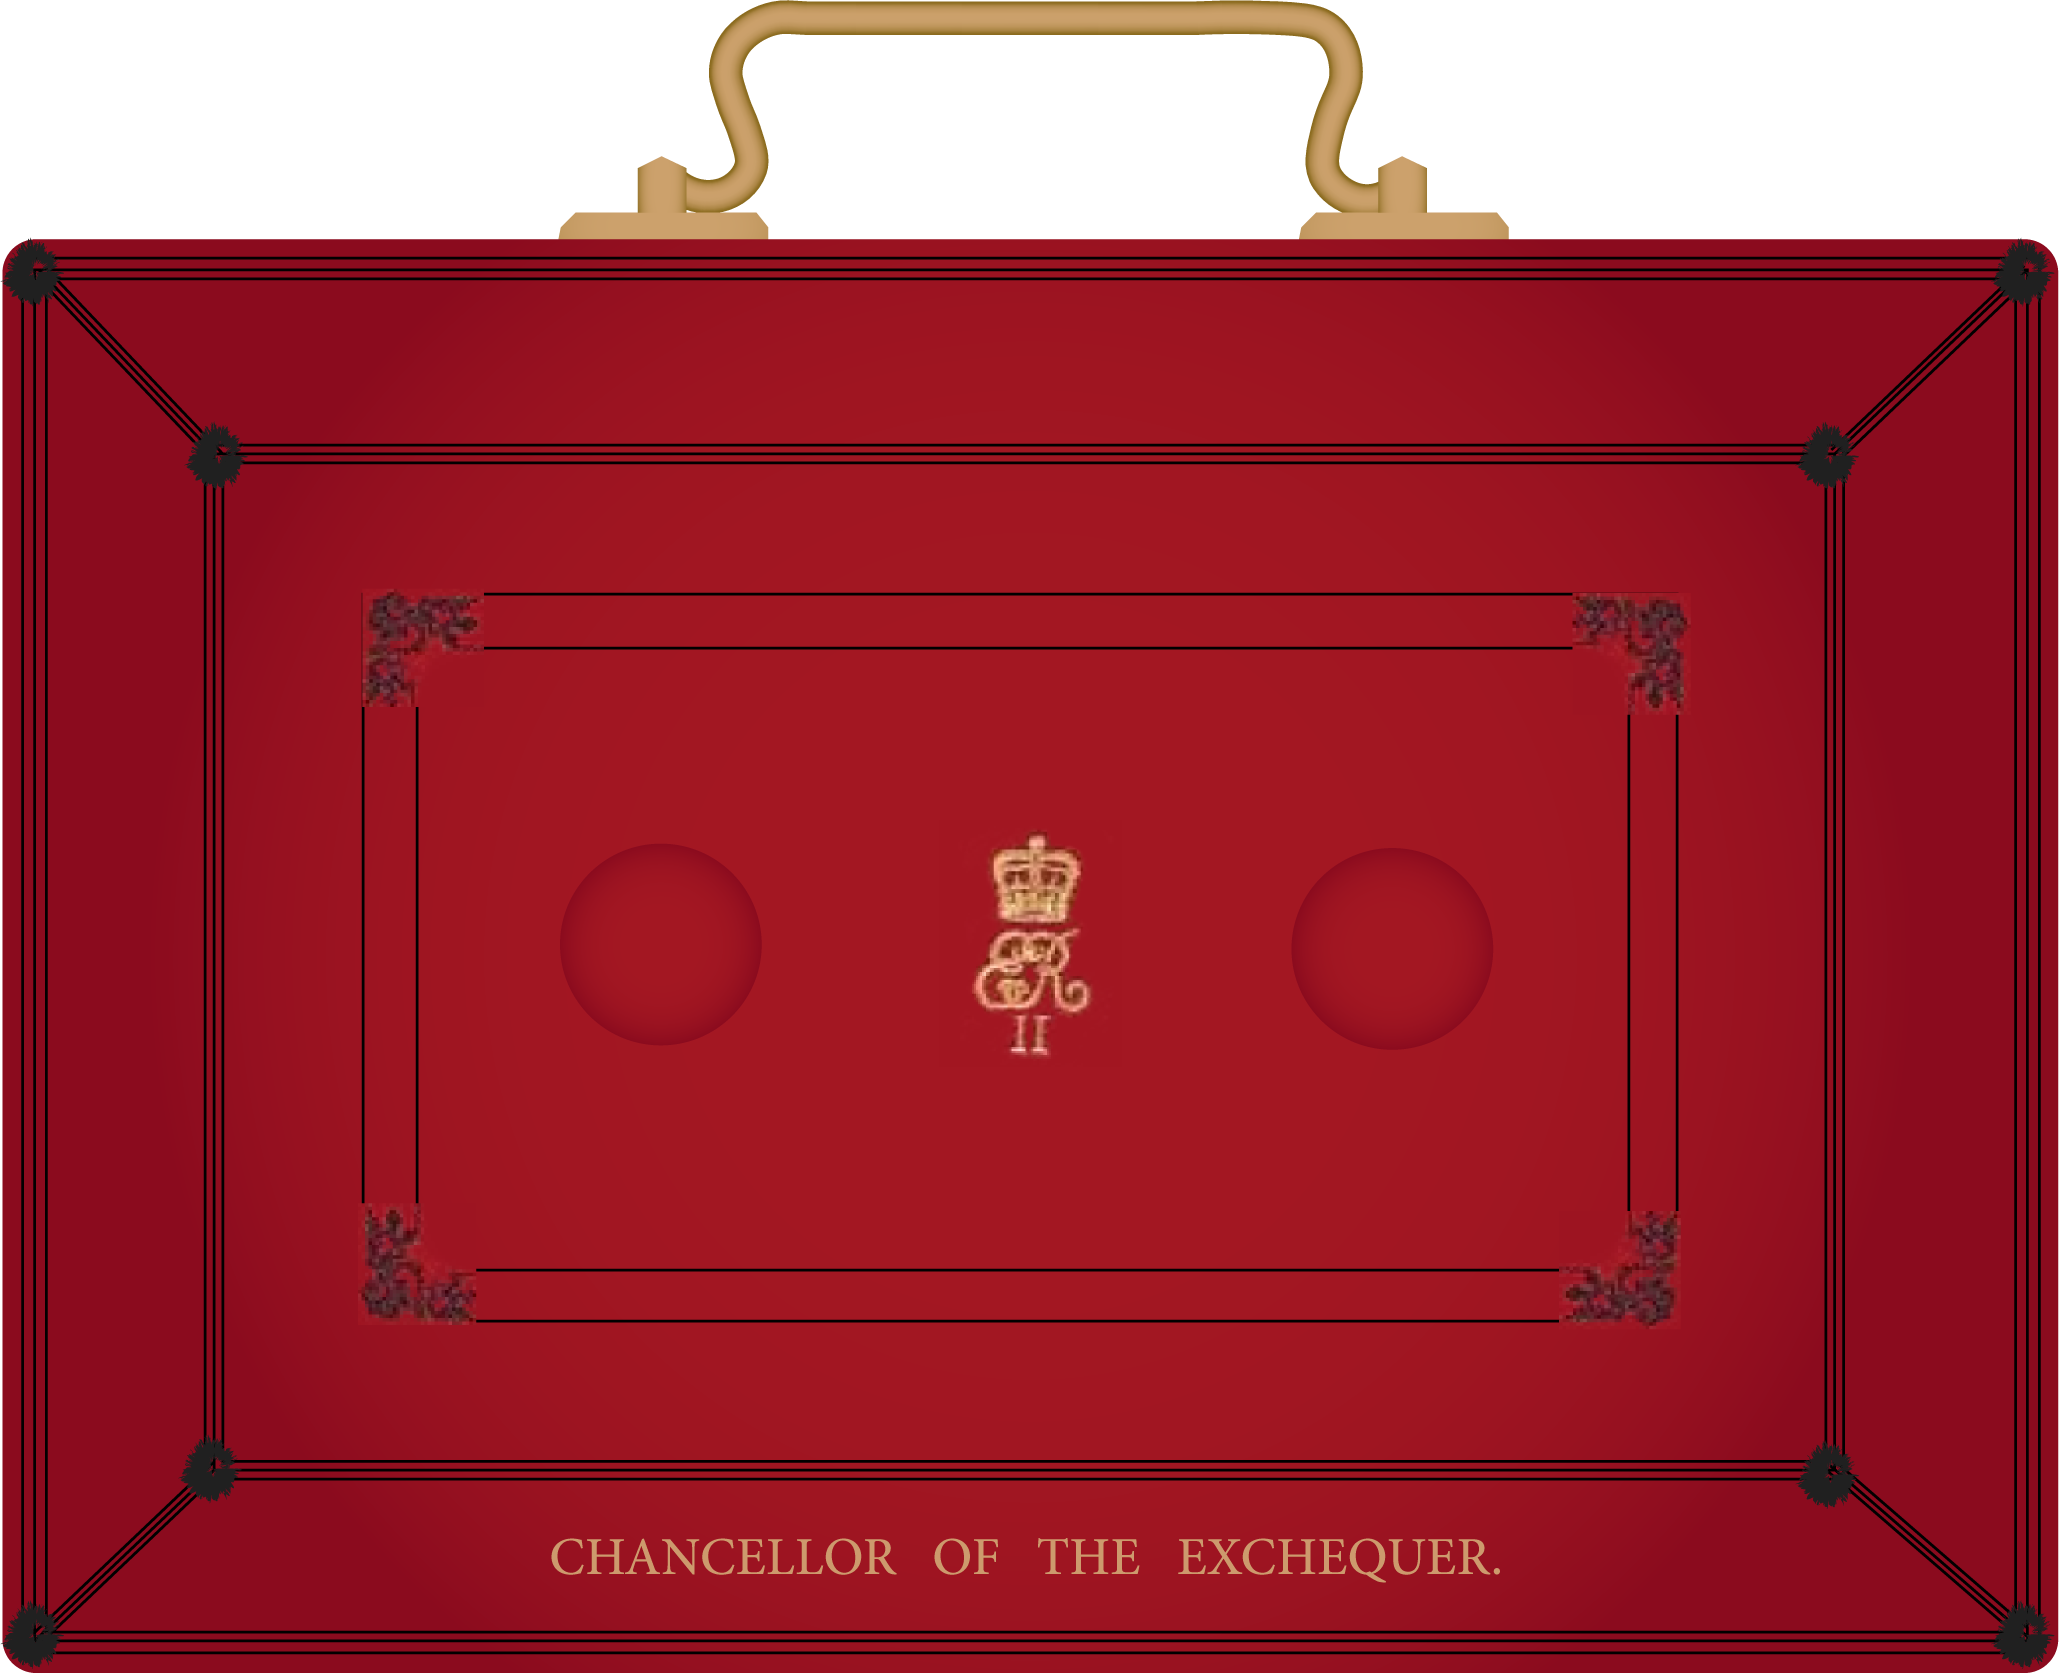 Chancellor's red box graphic